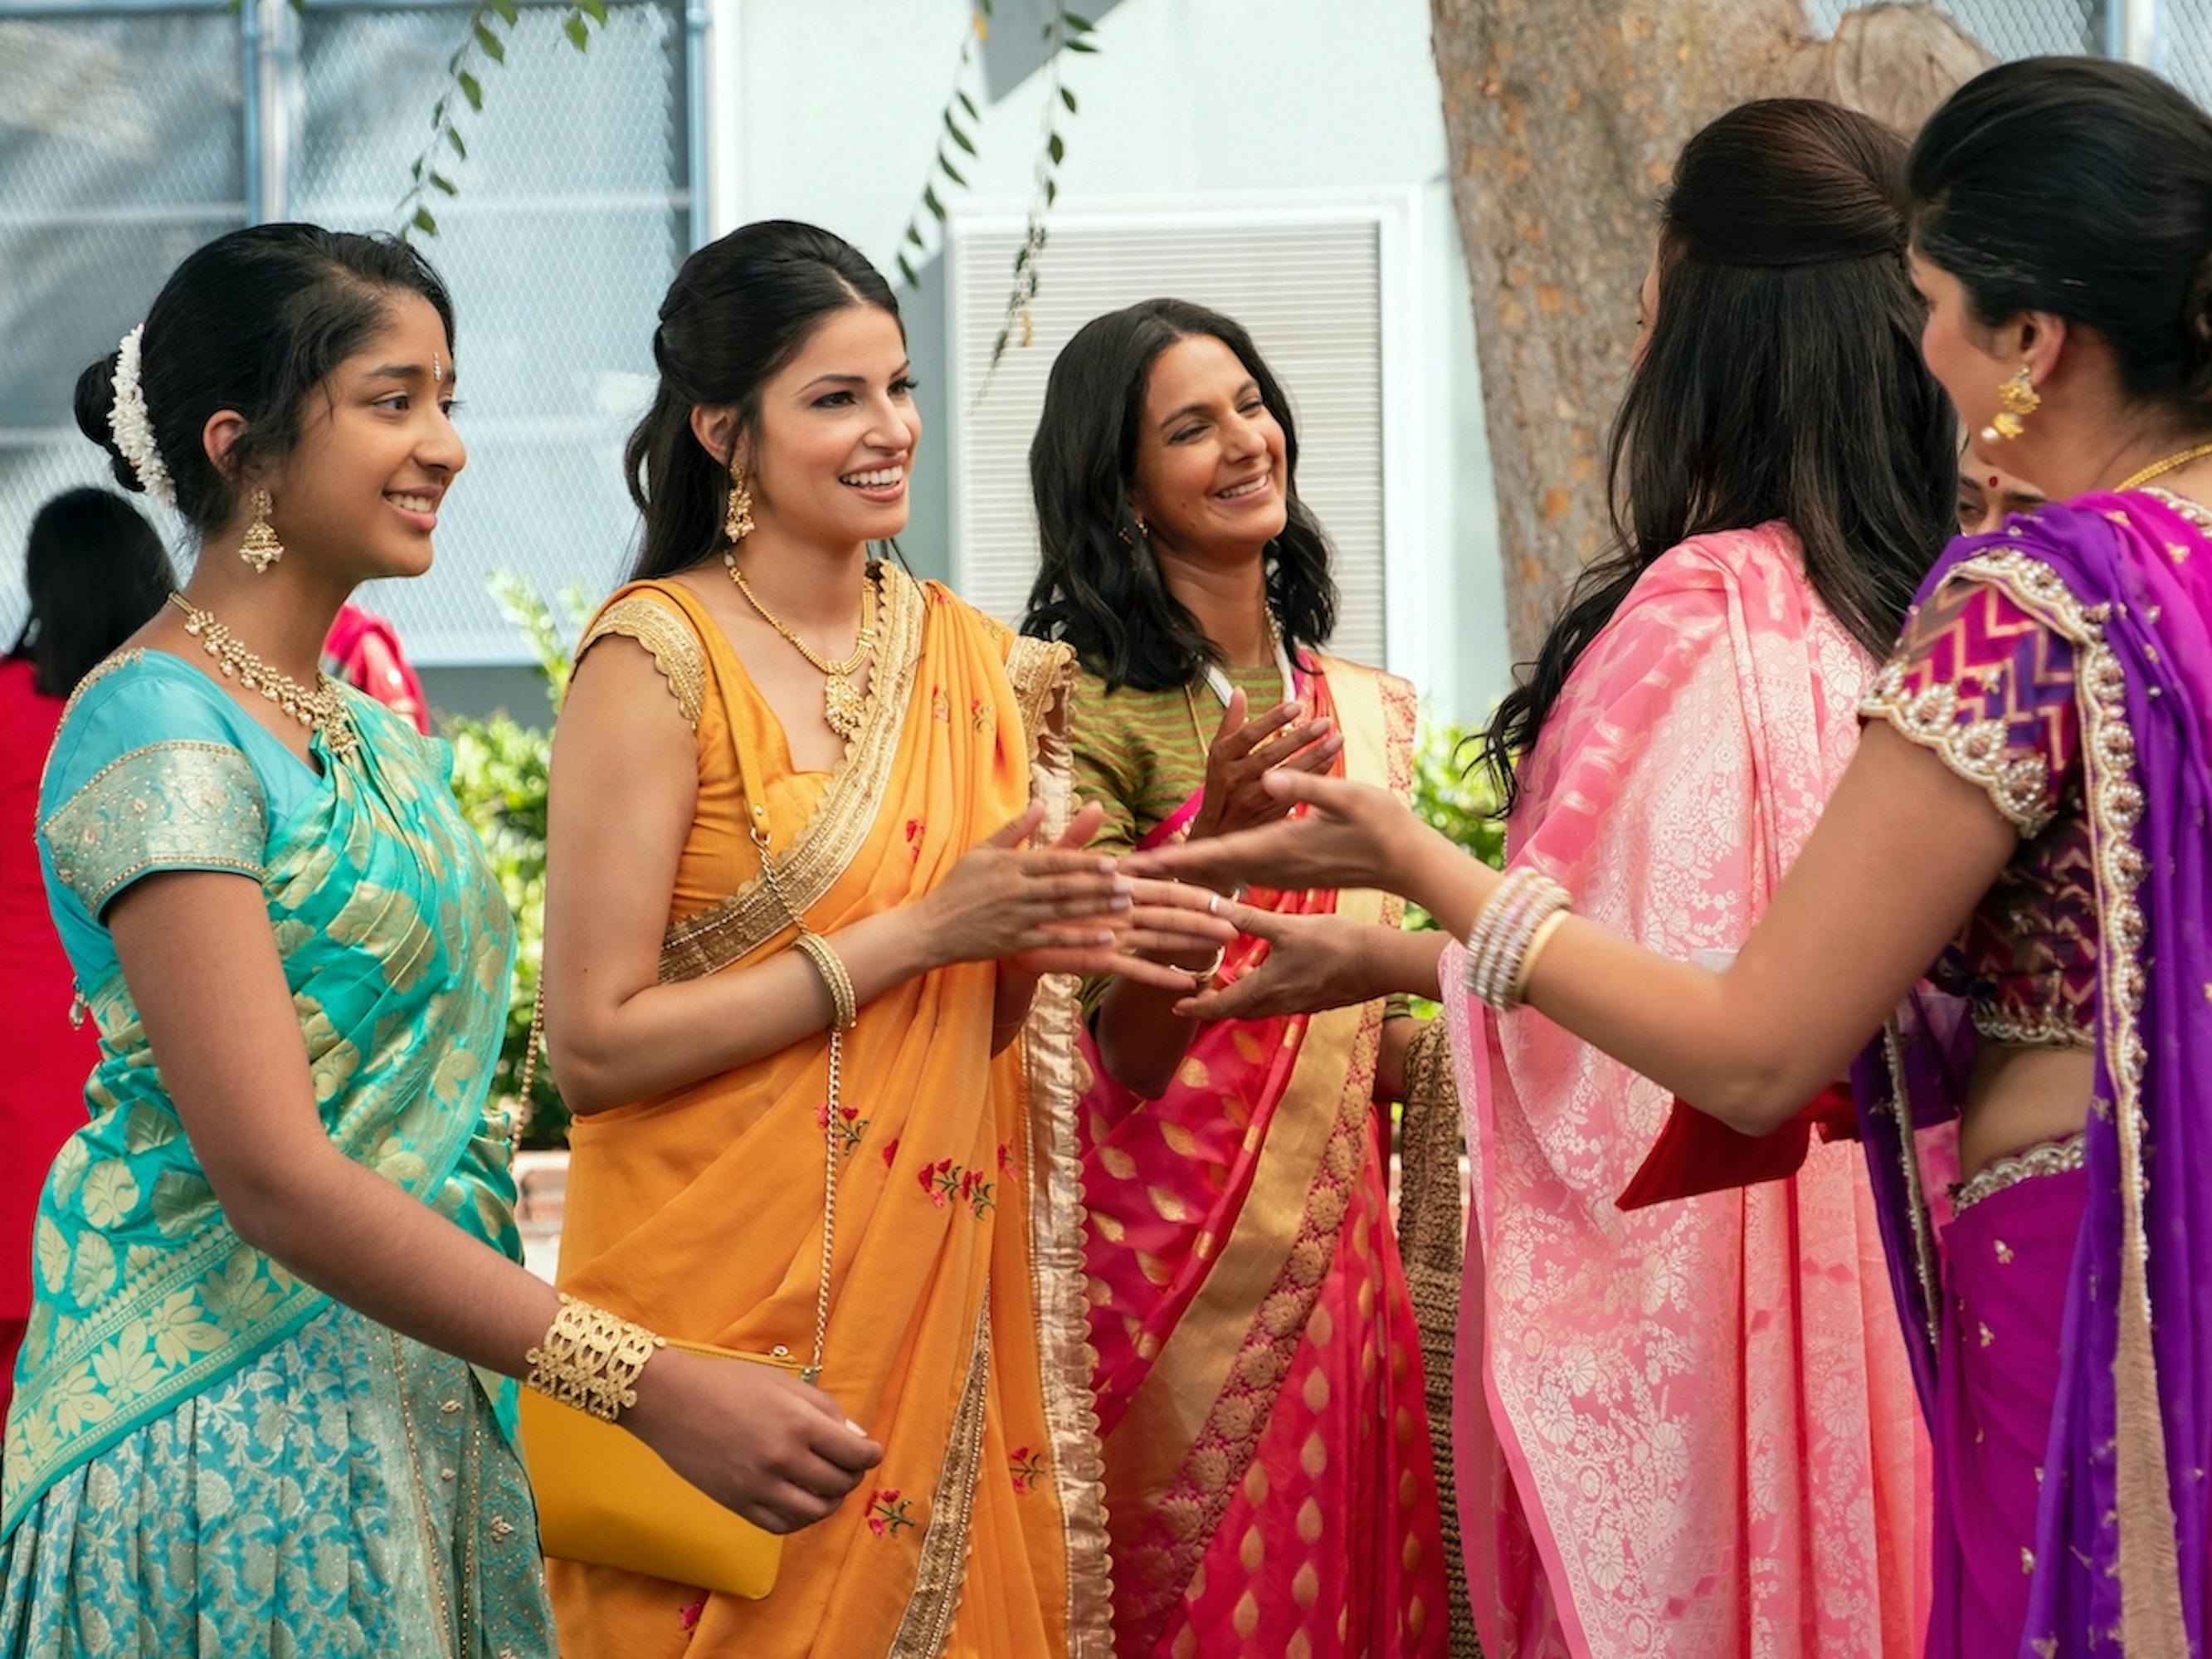 Devi Vishwakumar (Maitreyi Ramakrishnan) Kamala (Richa Moorjani), Nalini Vishwakumar (Poorna Jagannathan), Jaya Kuyavar (Aarti Mann), and Auntie (Alice Amter) wear beautiful saris in turquoise, orange, red, pink, and purple. They embrace each other.